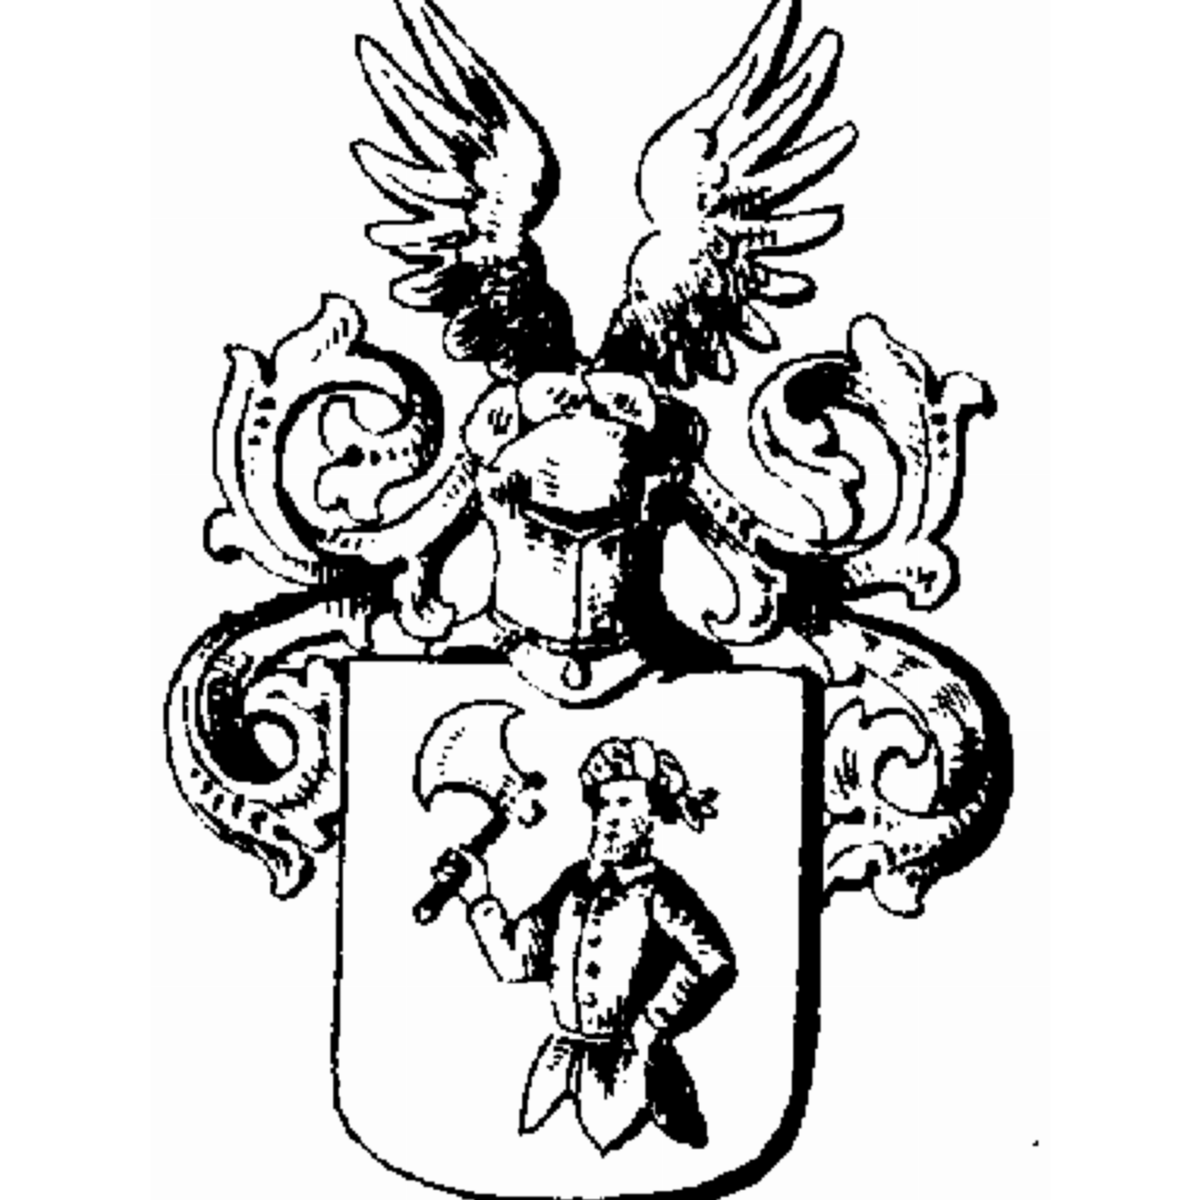 Escudo de la familia Schinkel-Jagehase